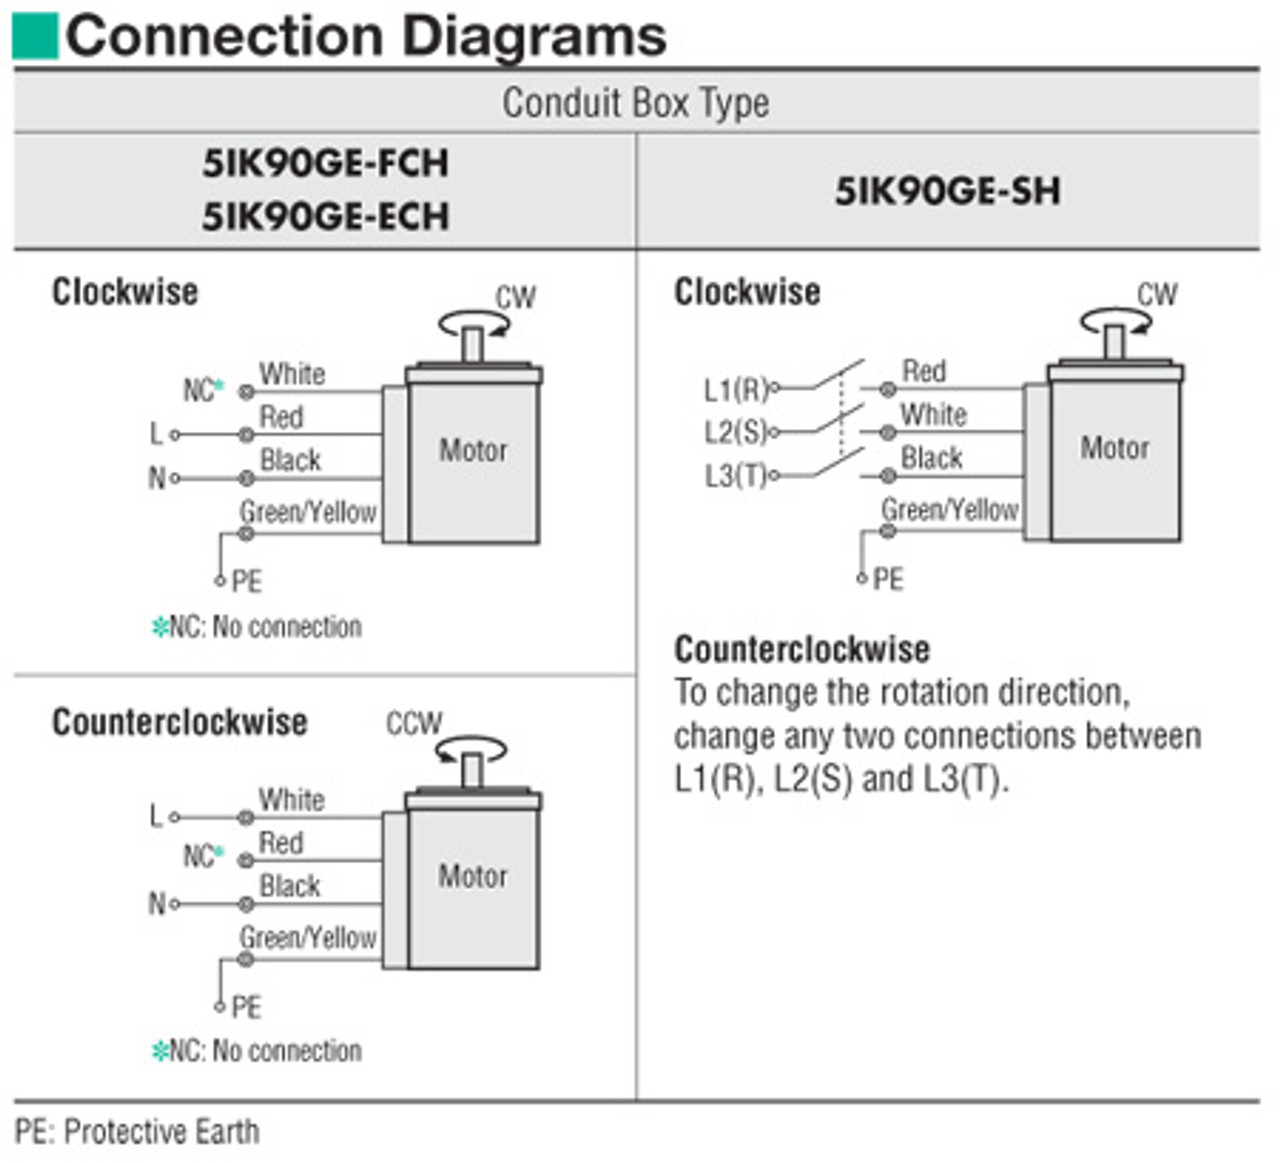 5IK90GE-ECH / 5GE3.6S - Connection